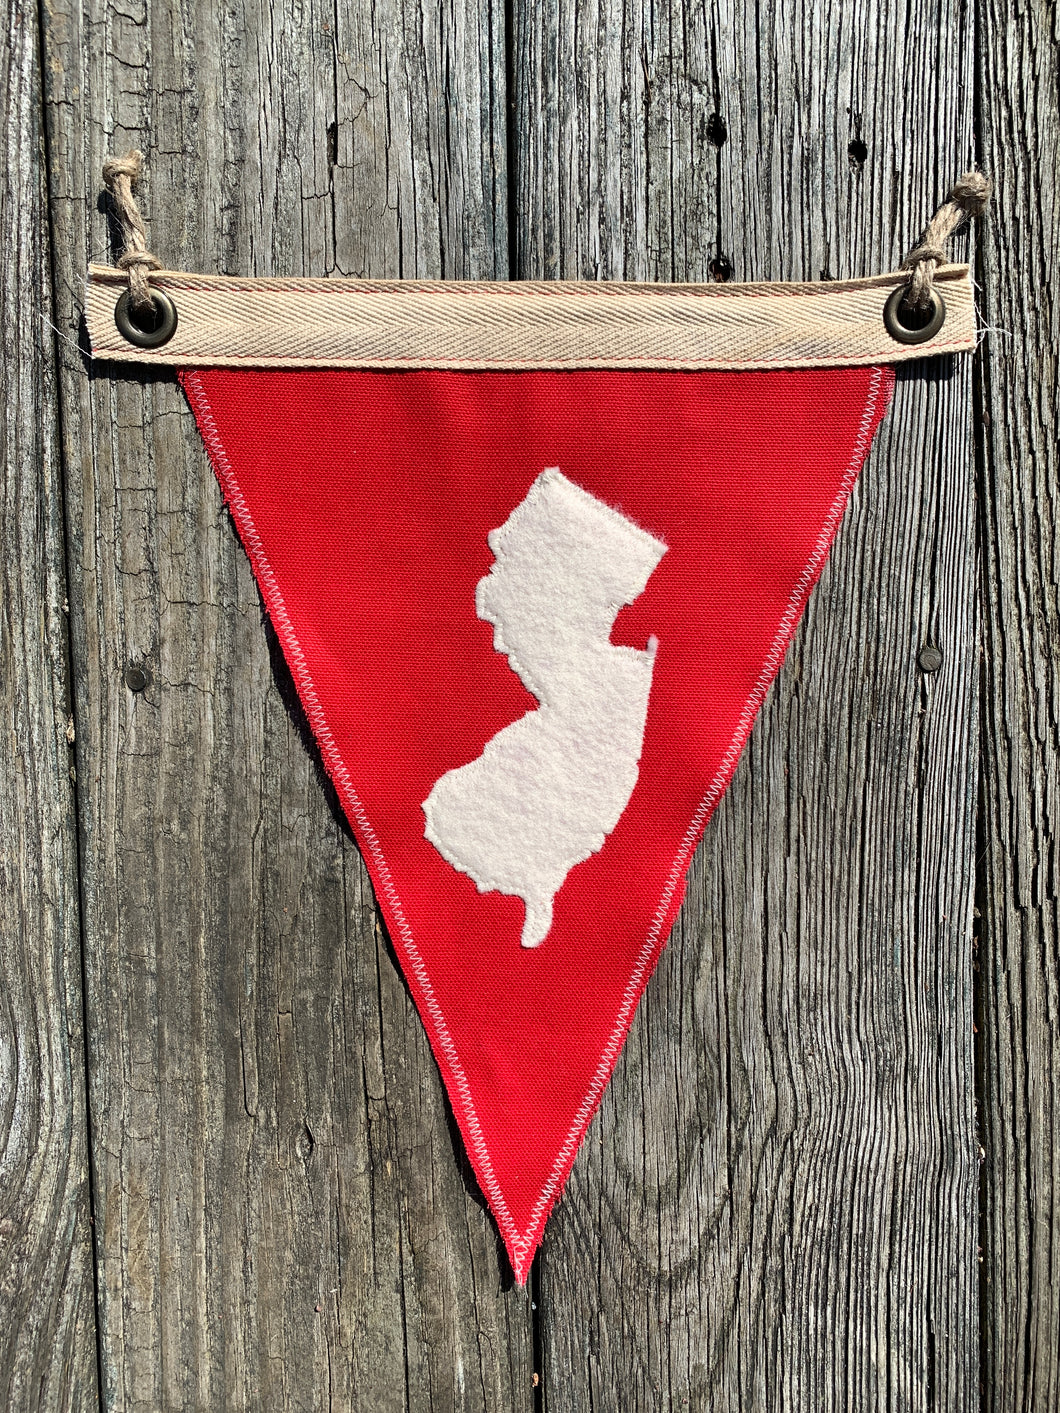 NJ Fun Flag - New Jersey